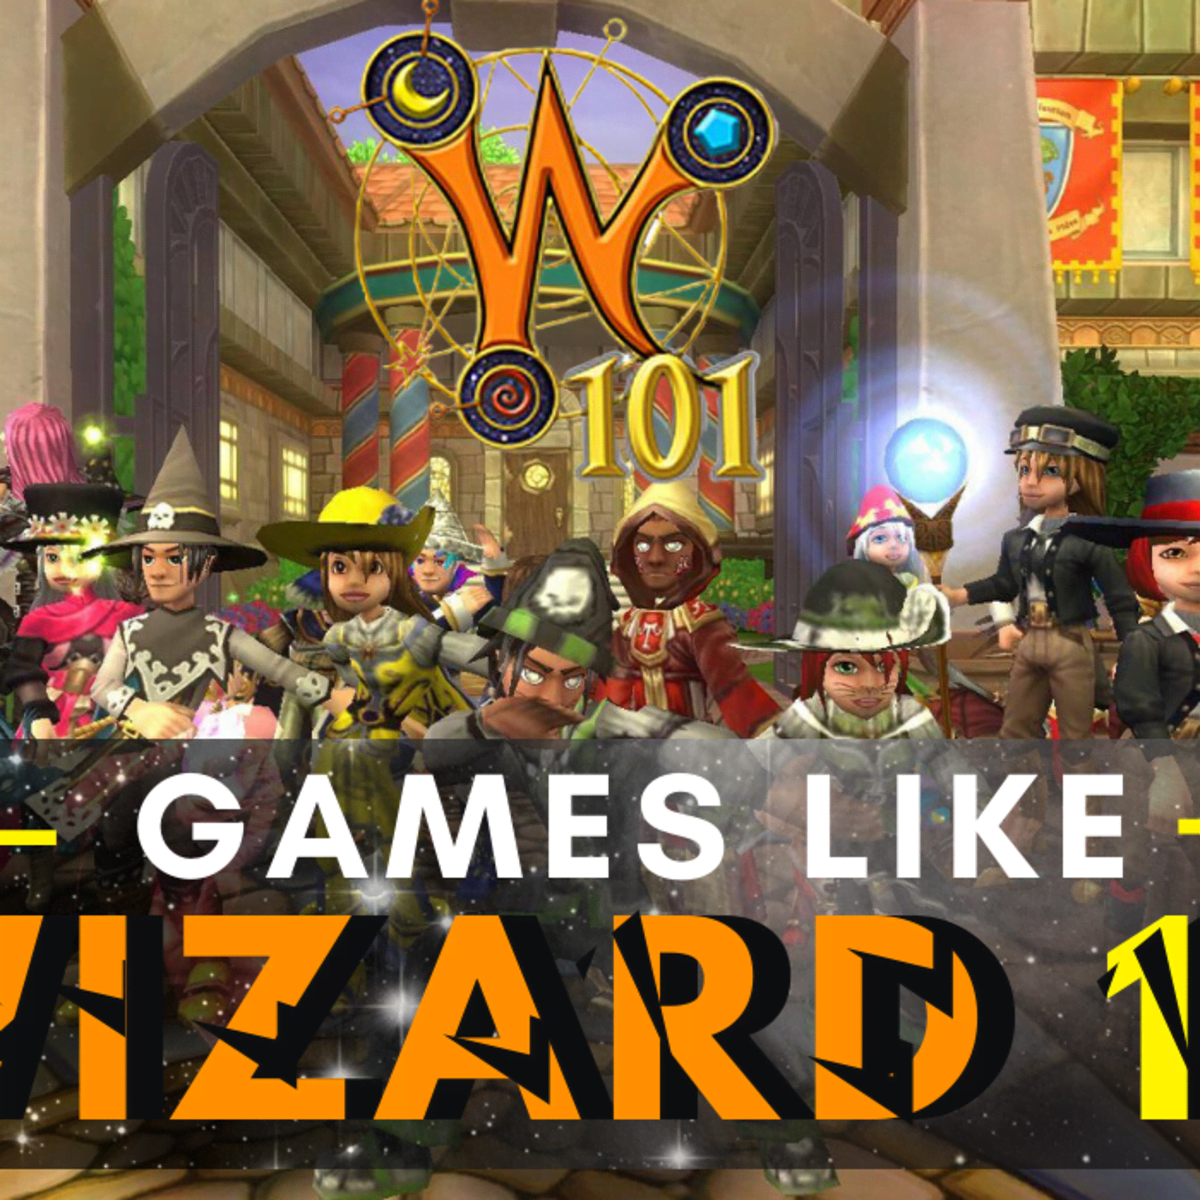 Wizard101 - Wizard101 added a new photo.